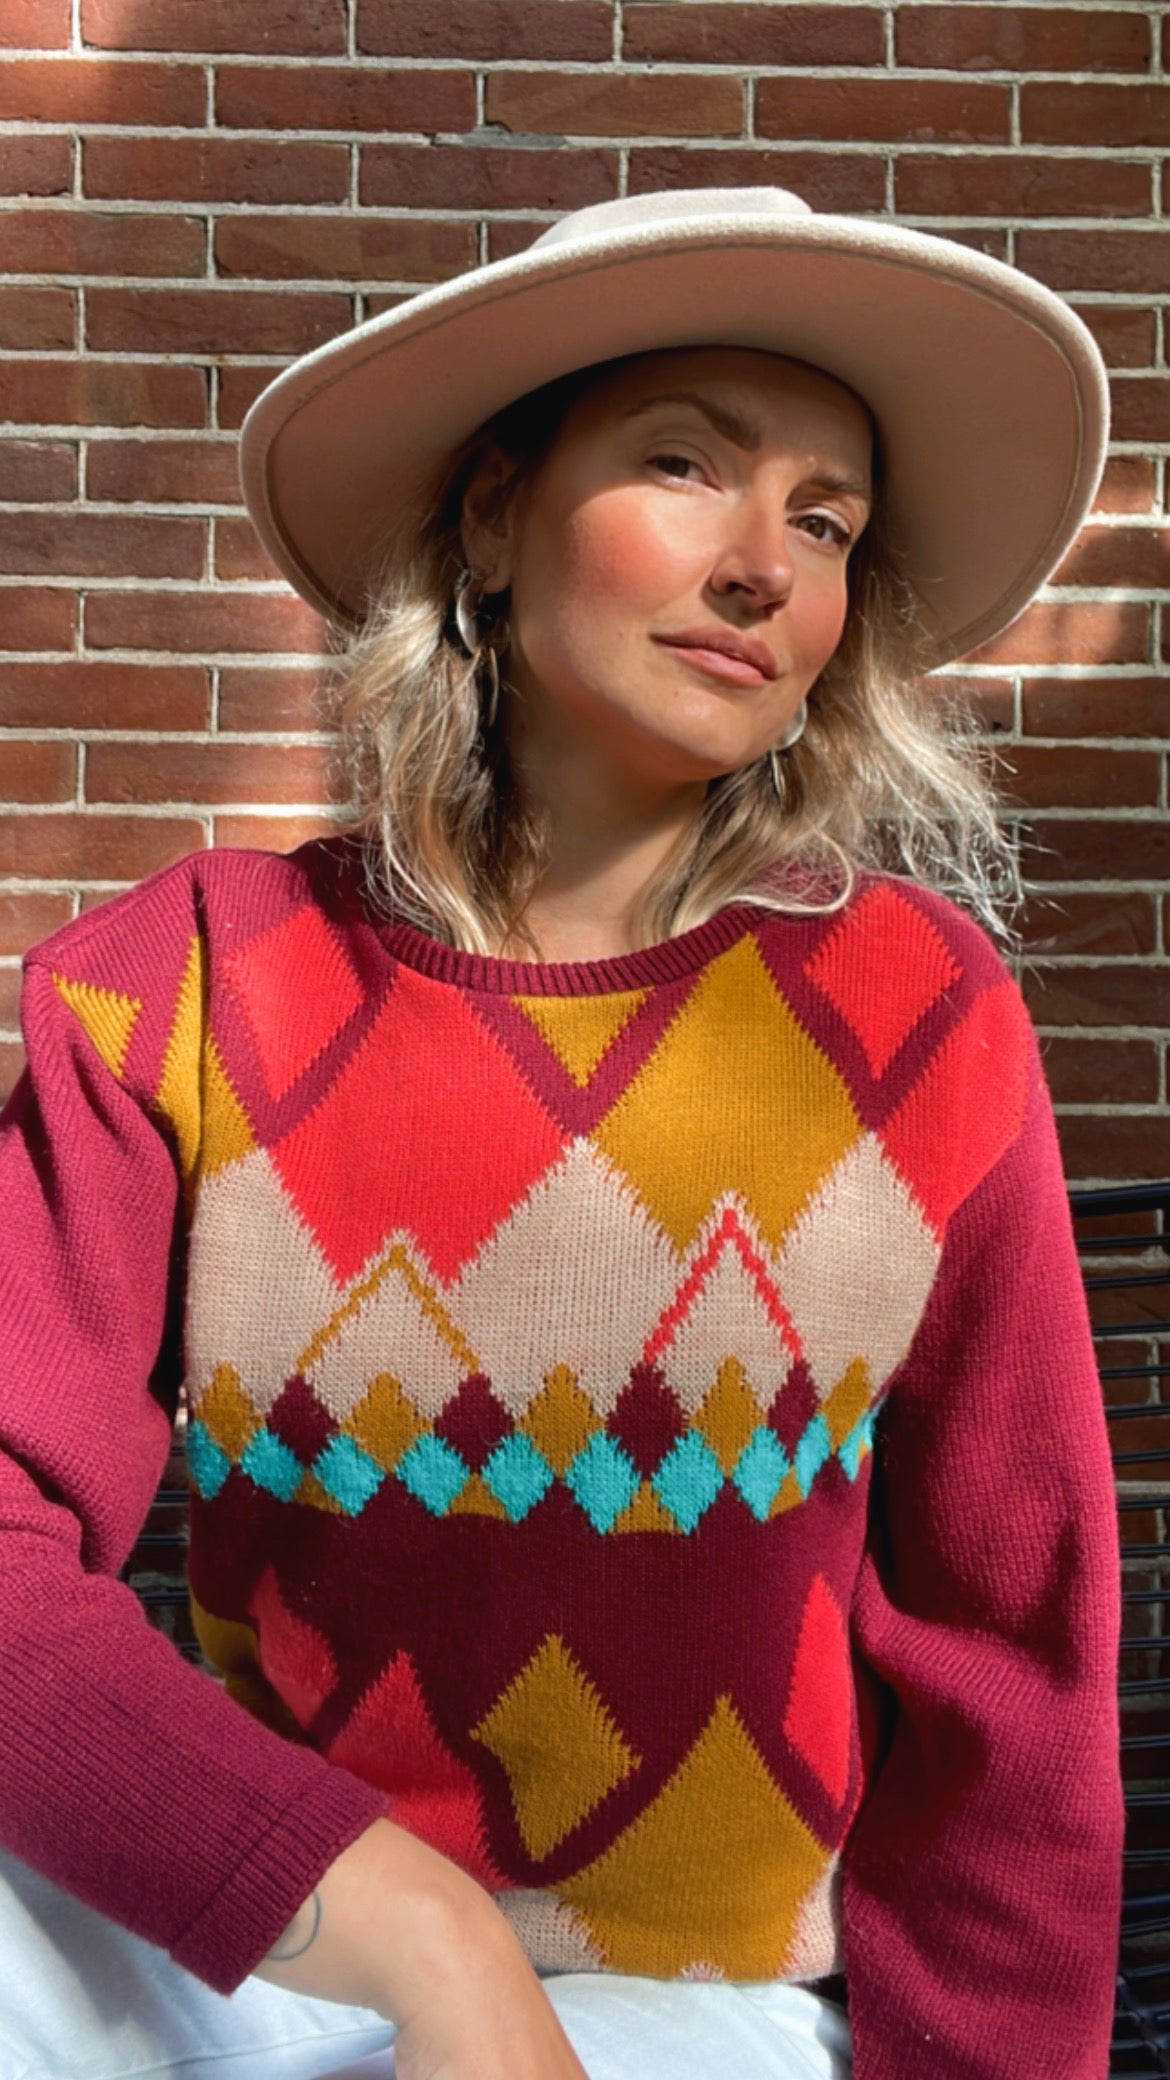 Colorful jumper